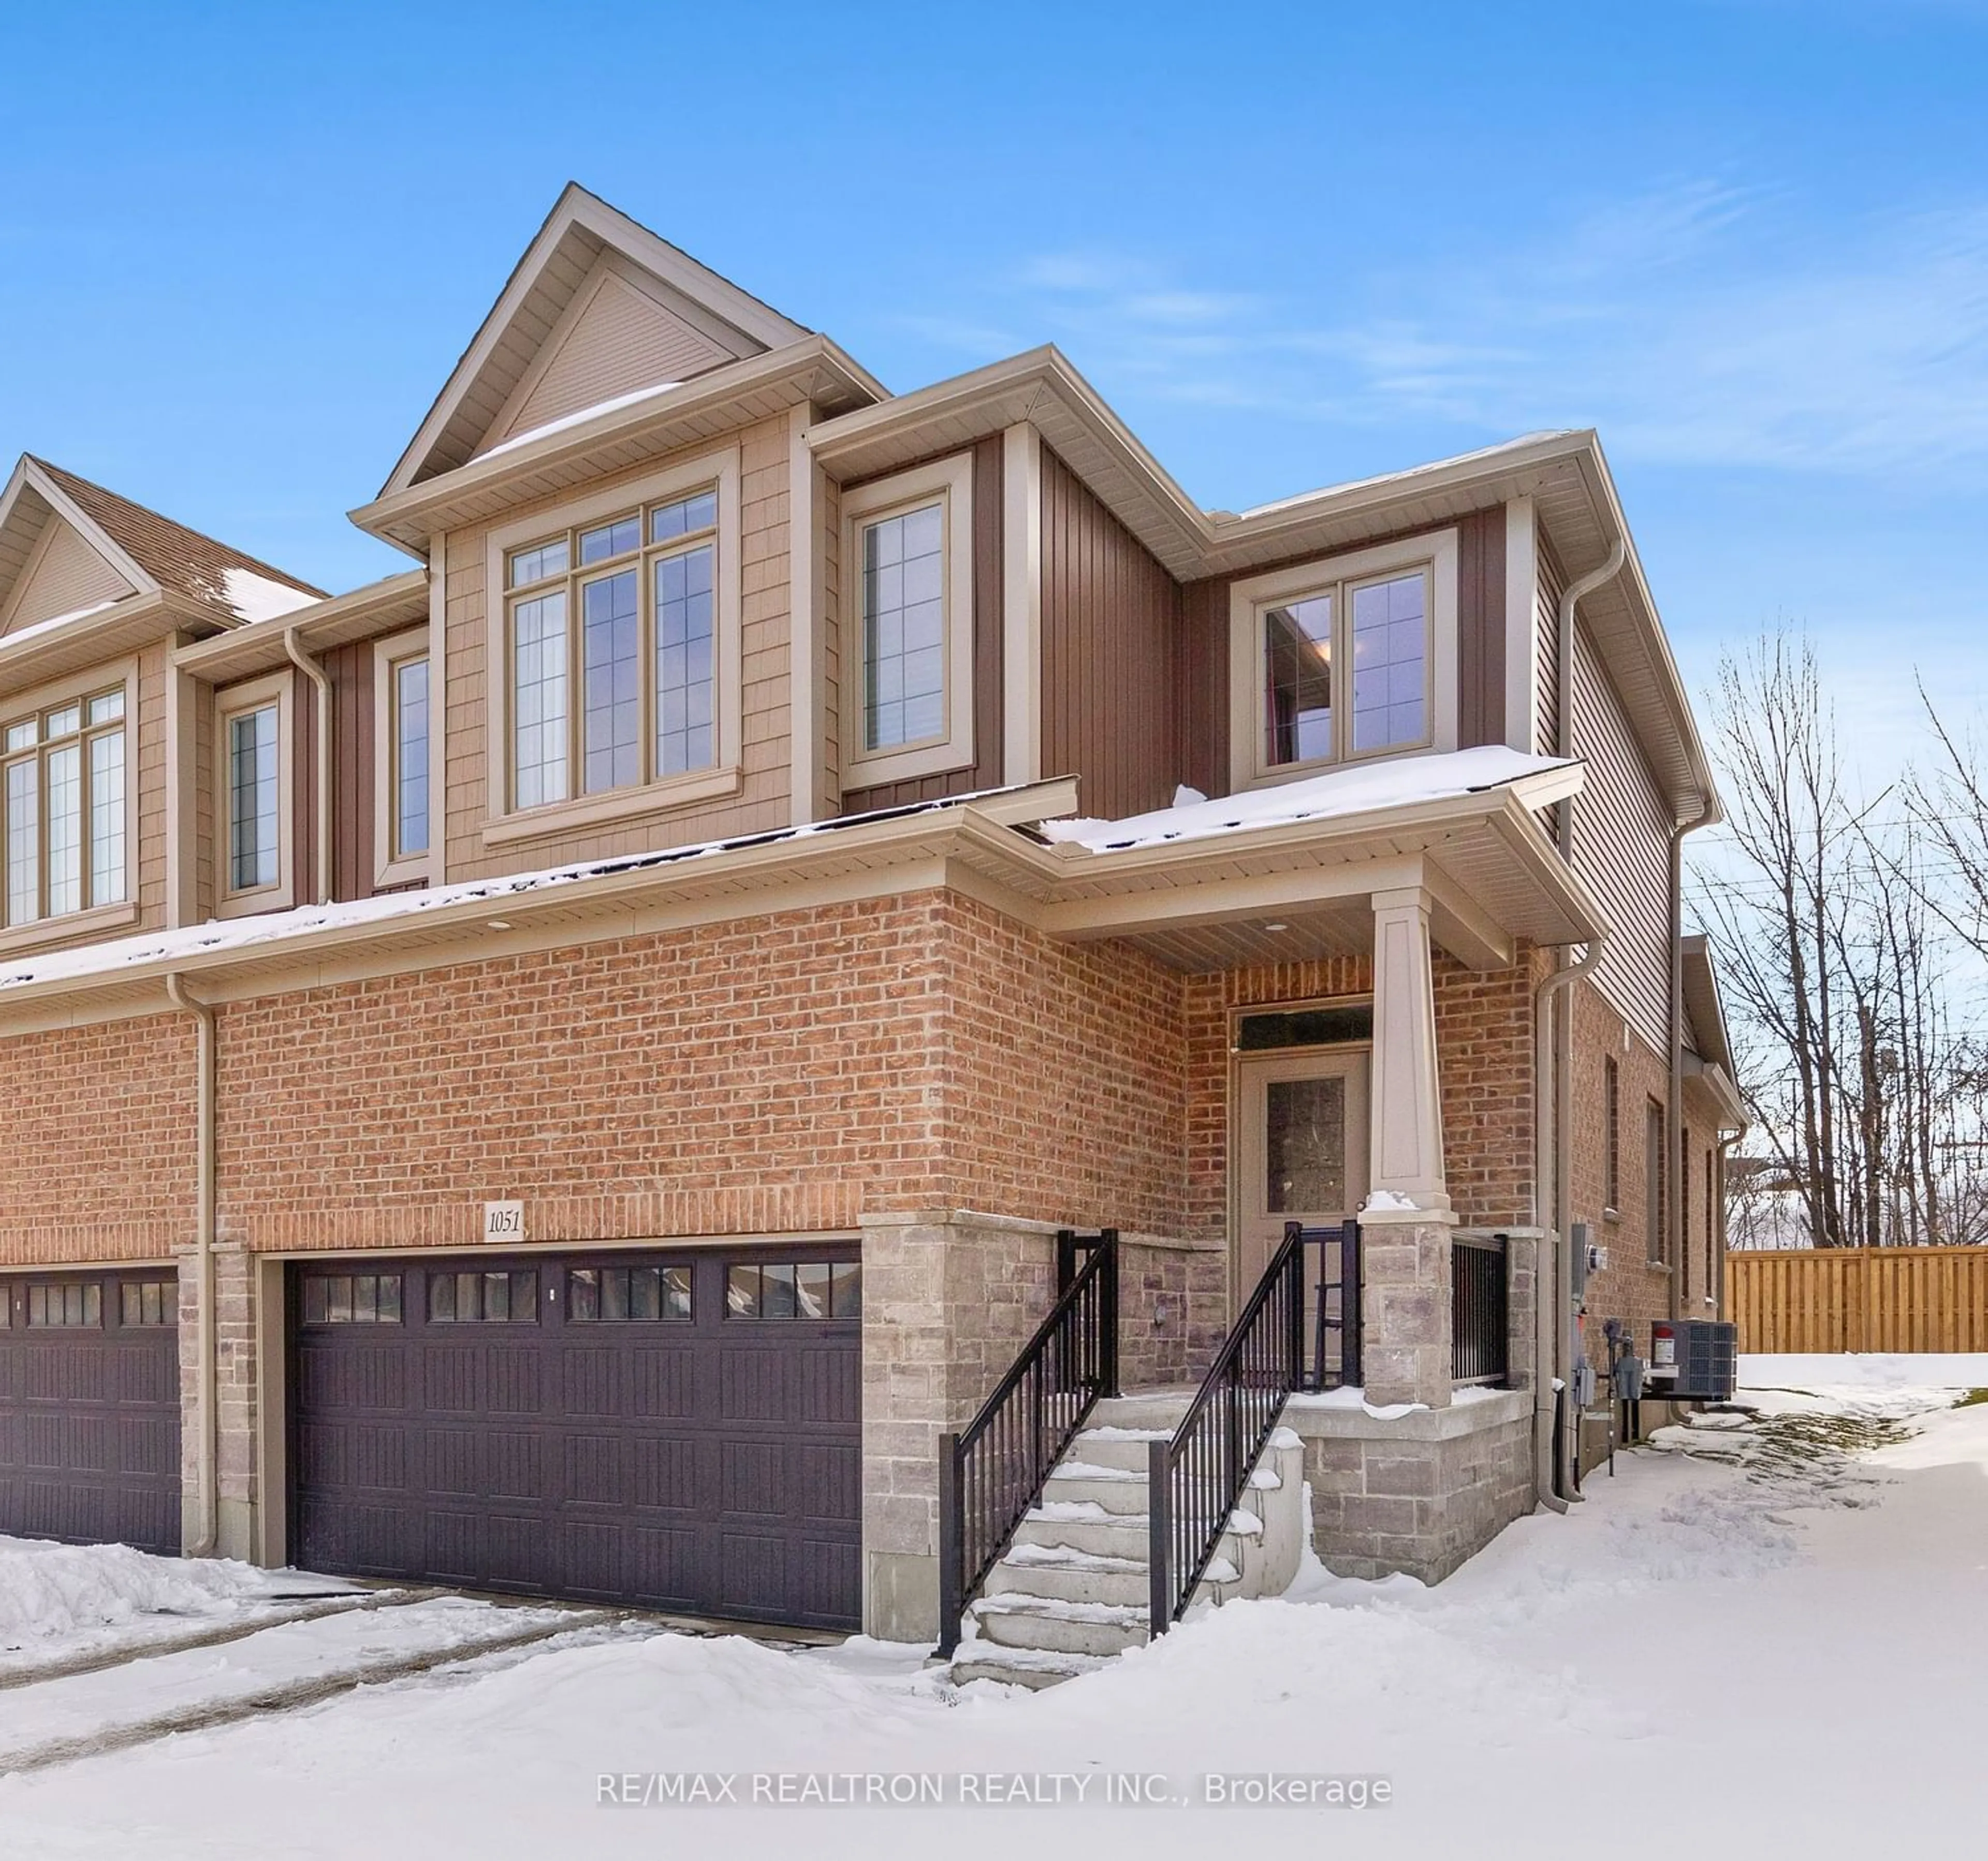 Home with brick exterior material for 1051 Wright Dr, Midland Ontario L4R 0E4